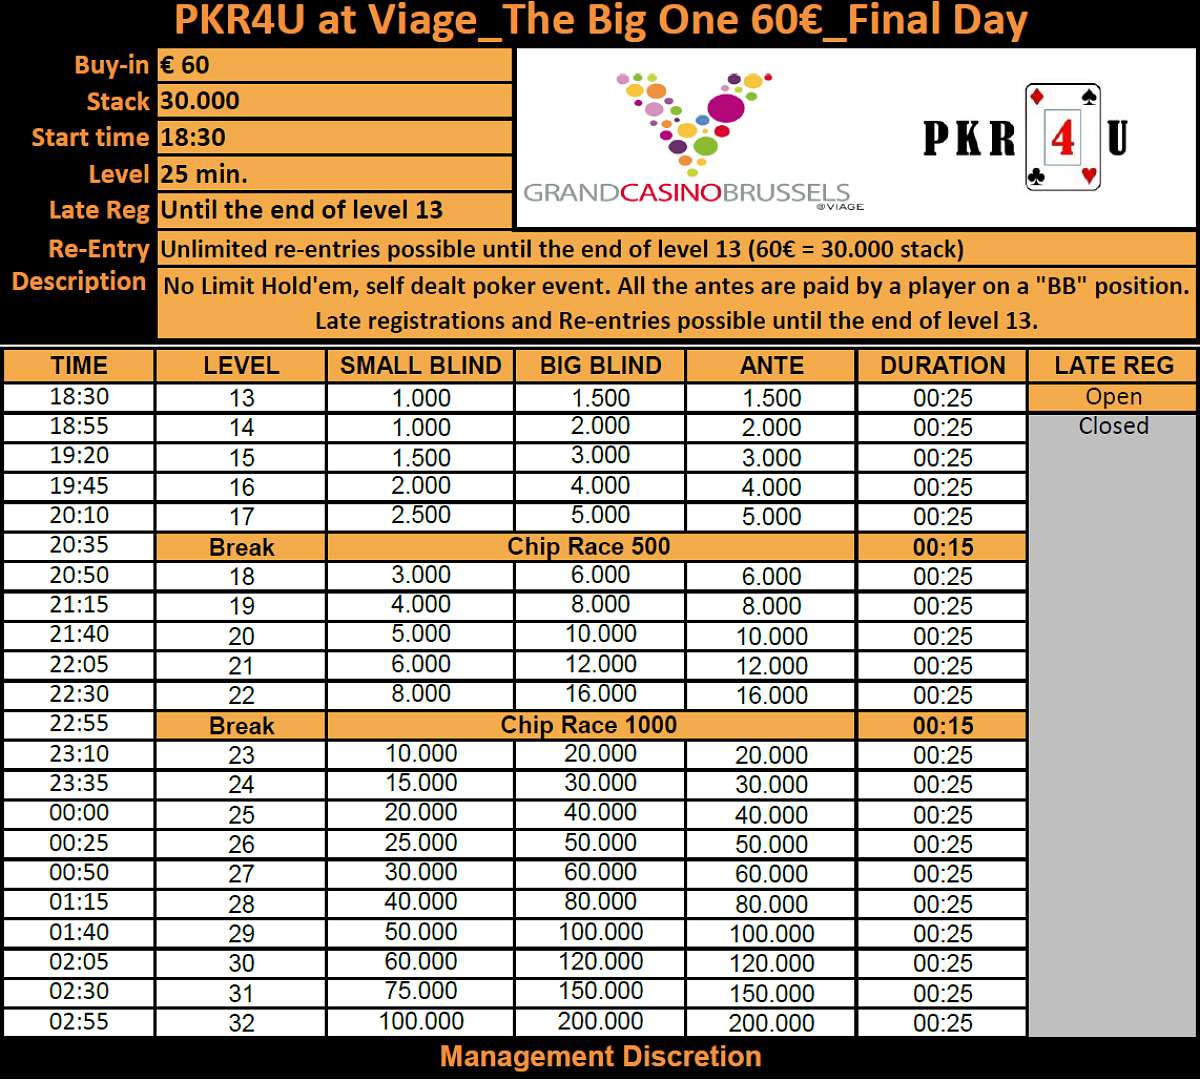 PKR4U - The Big One - €60 - Final Day